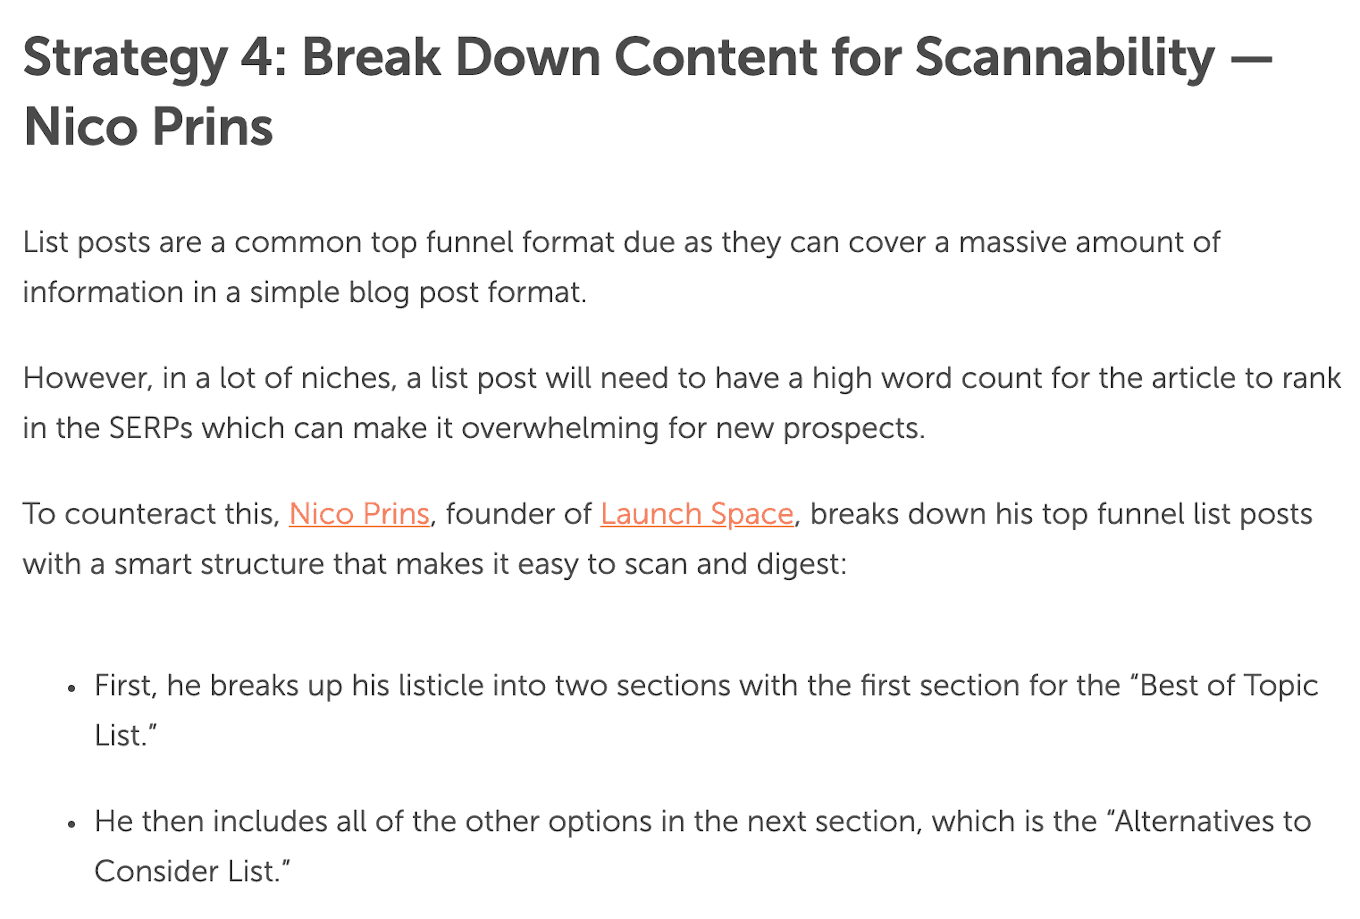 Break Down Content for Scannability - Nico Prins